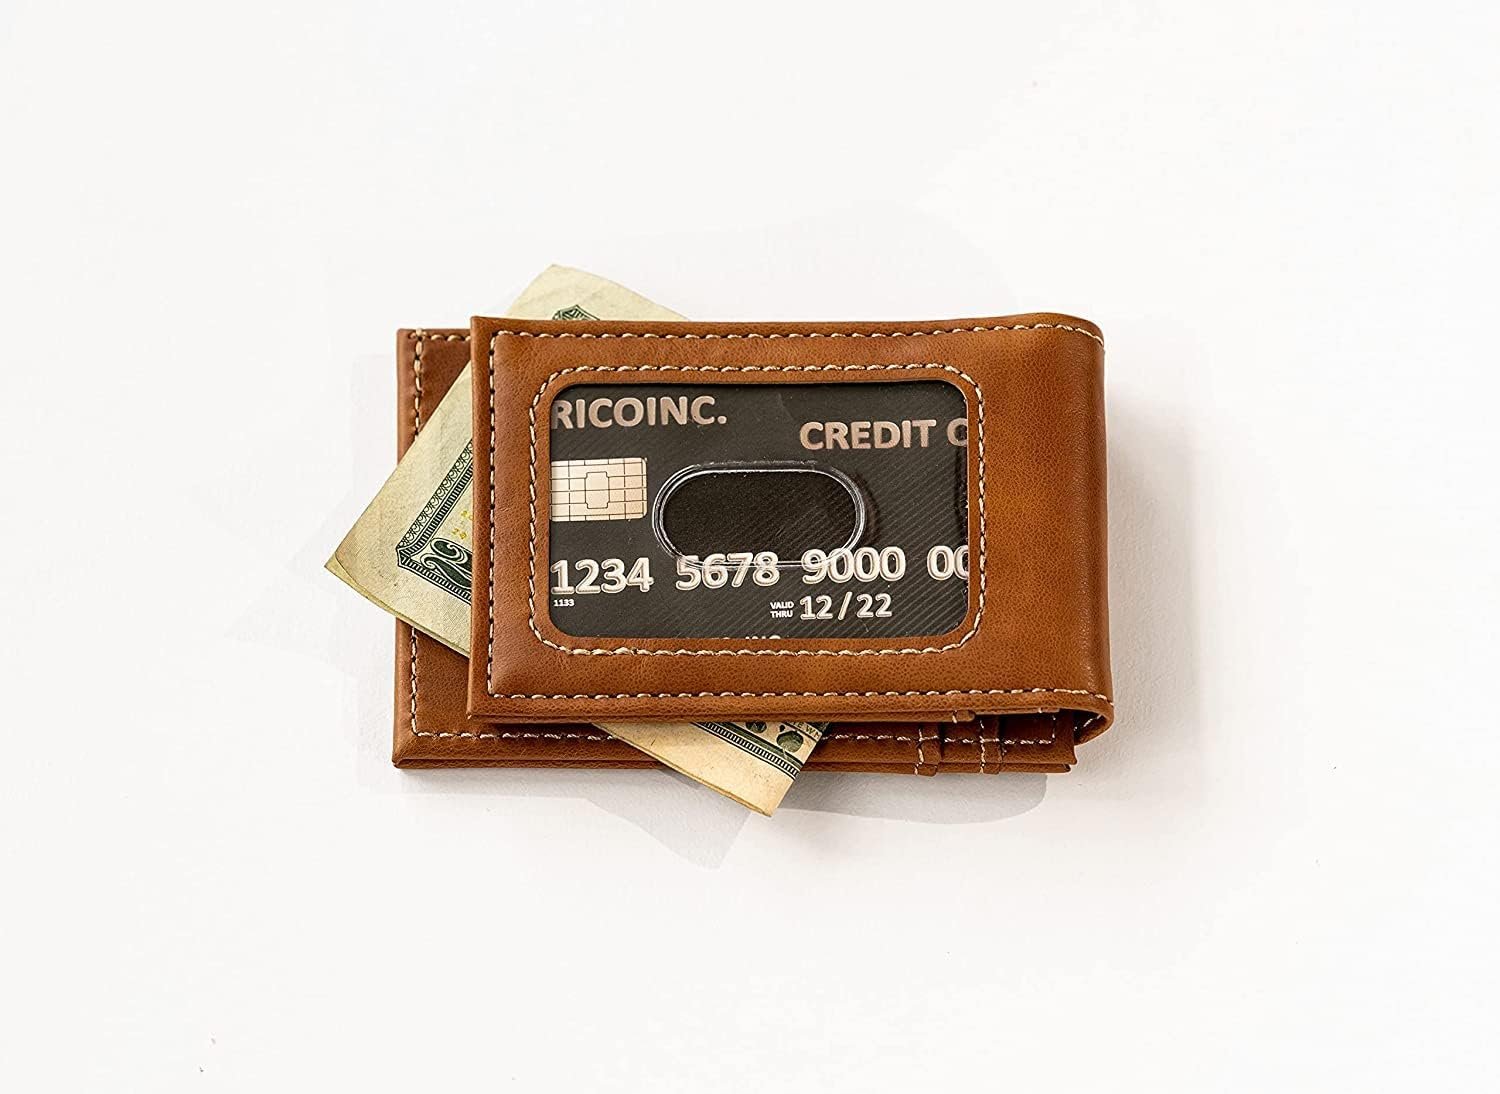 University of Oklahoma Sooners Premium Brown Leather Wallet, Front Pocket Magnetic Money Clip, Laser Engraved, Vegan